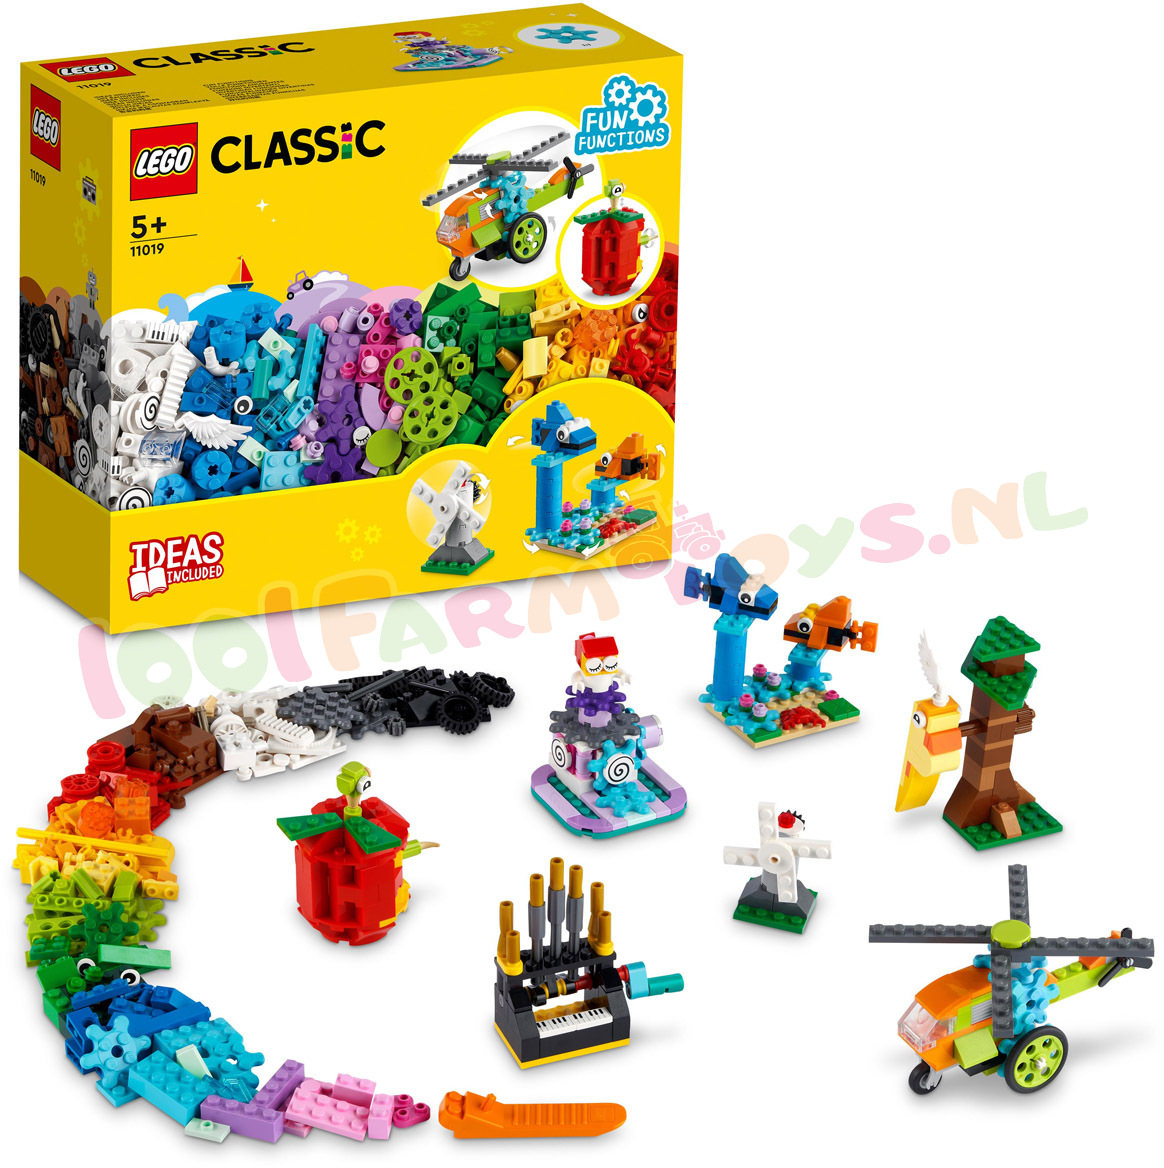 Afleiden schilder Vriend LEGO CLASSIC Stenen en Functies - 11019 - LEGO Classic - LEGO -  1001Farmtoys landbouwspeelgoed - De LEGO Classic Stenen en functies 11019  bouwset bevat